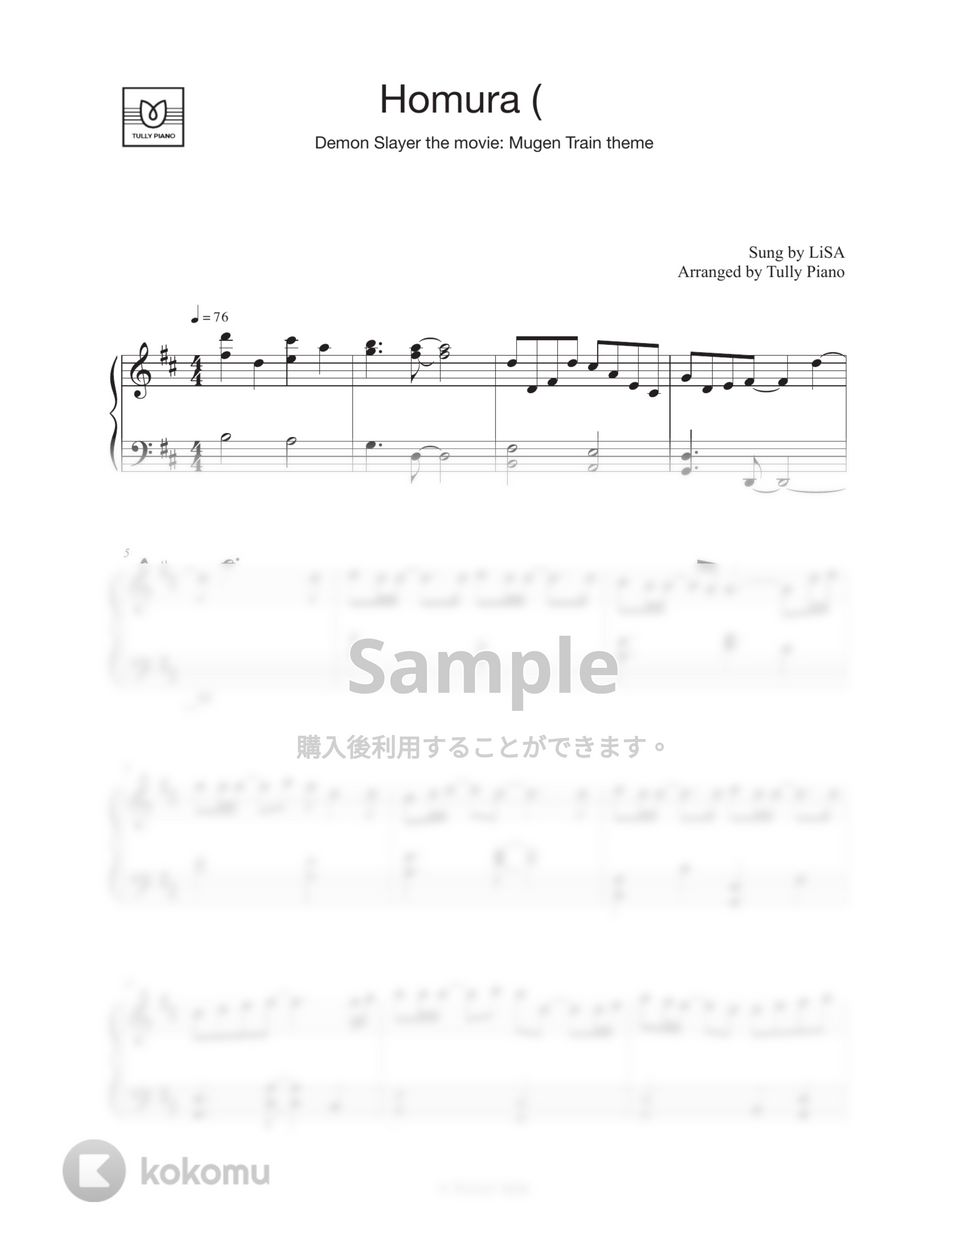 劇場版『鬼滅の刃 無限列車編』 - 炎 (初級楽譜) by Tully Piano